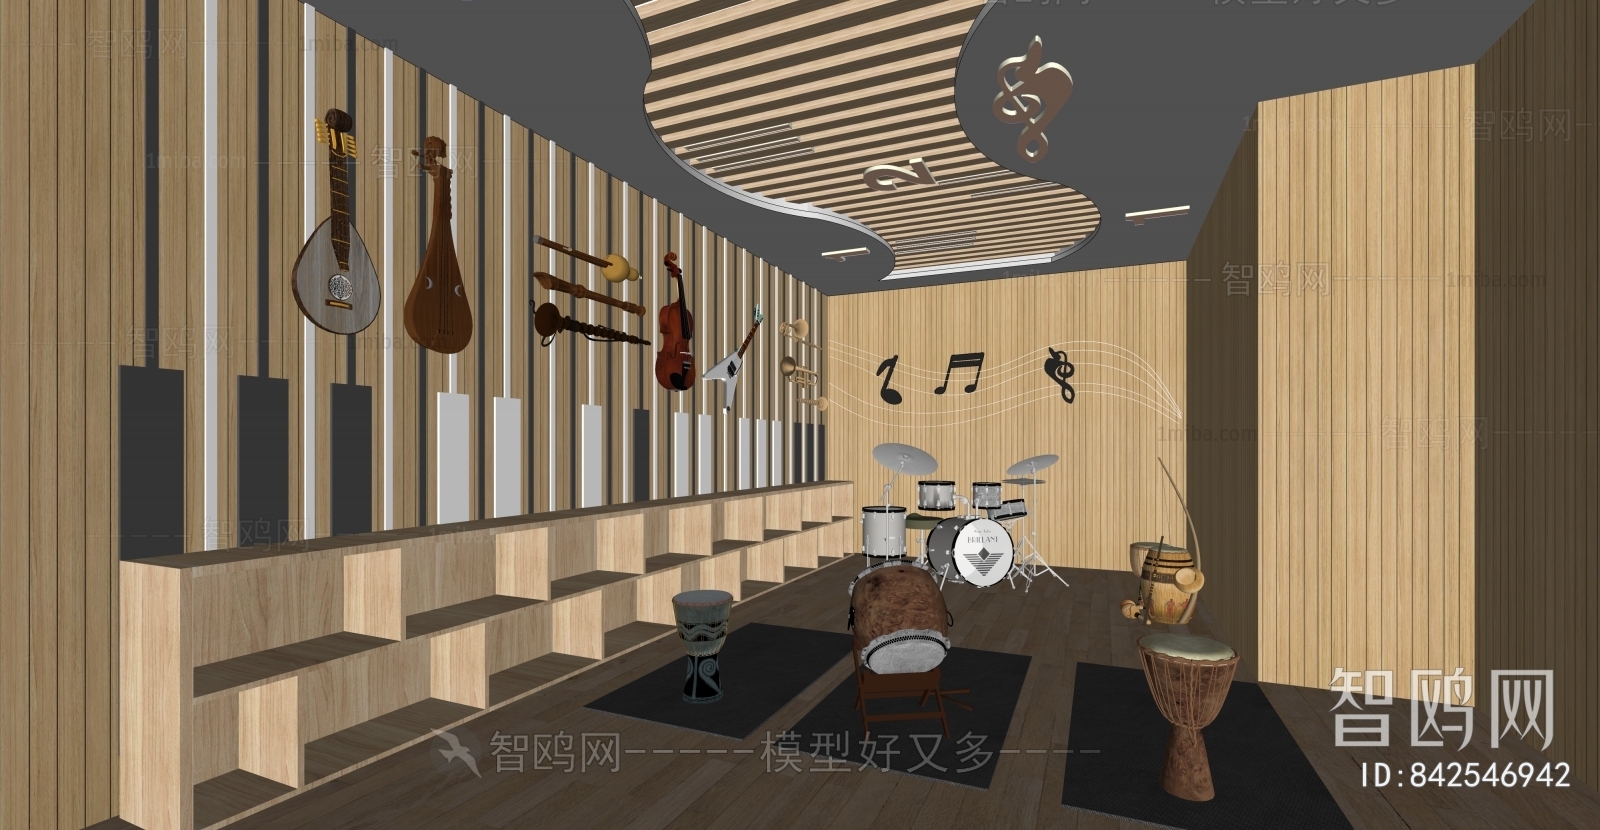 Modern Music Room